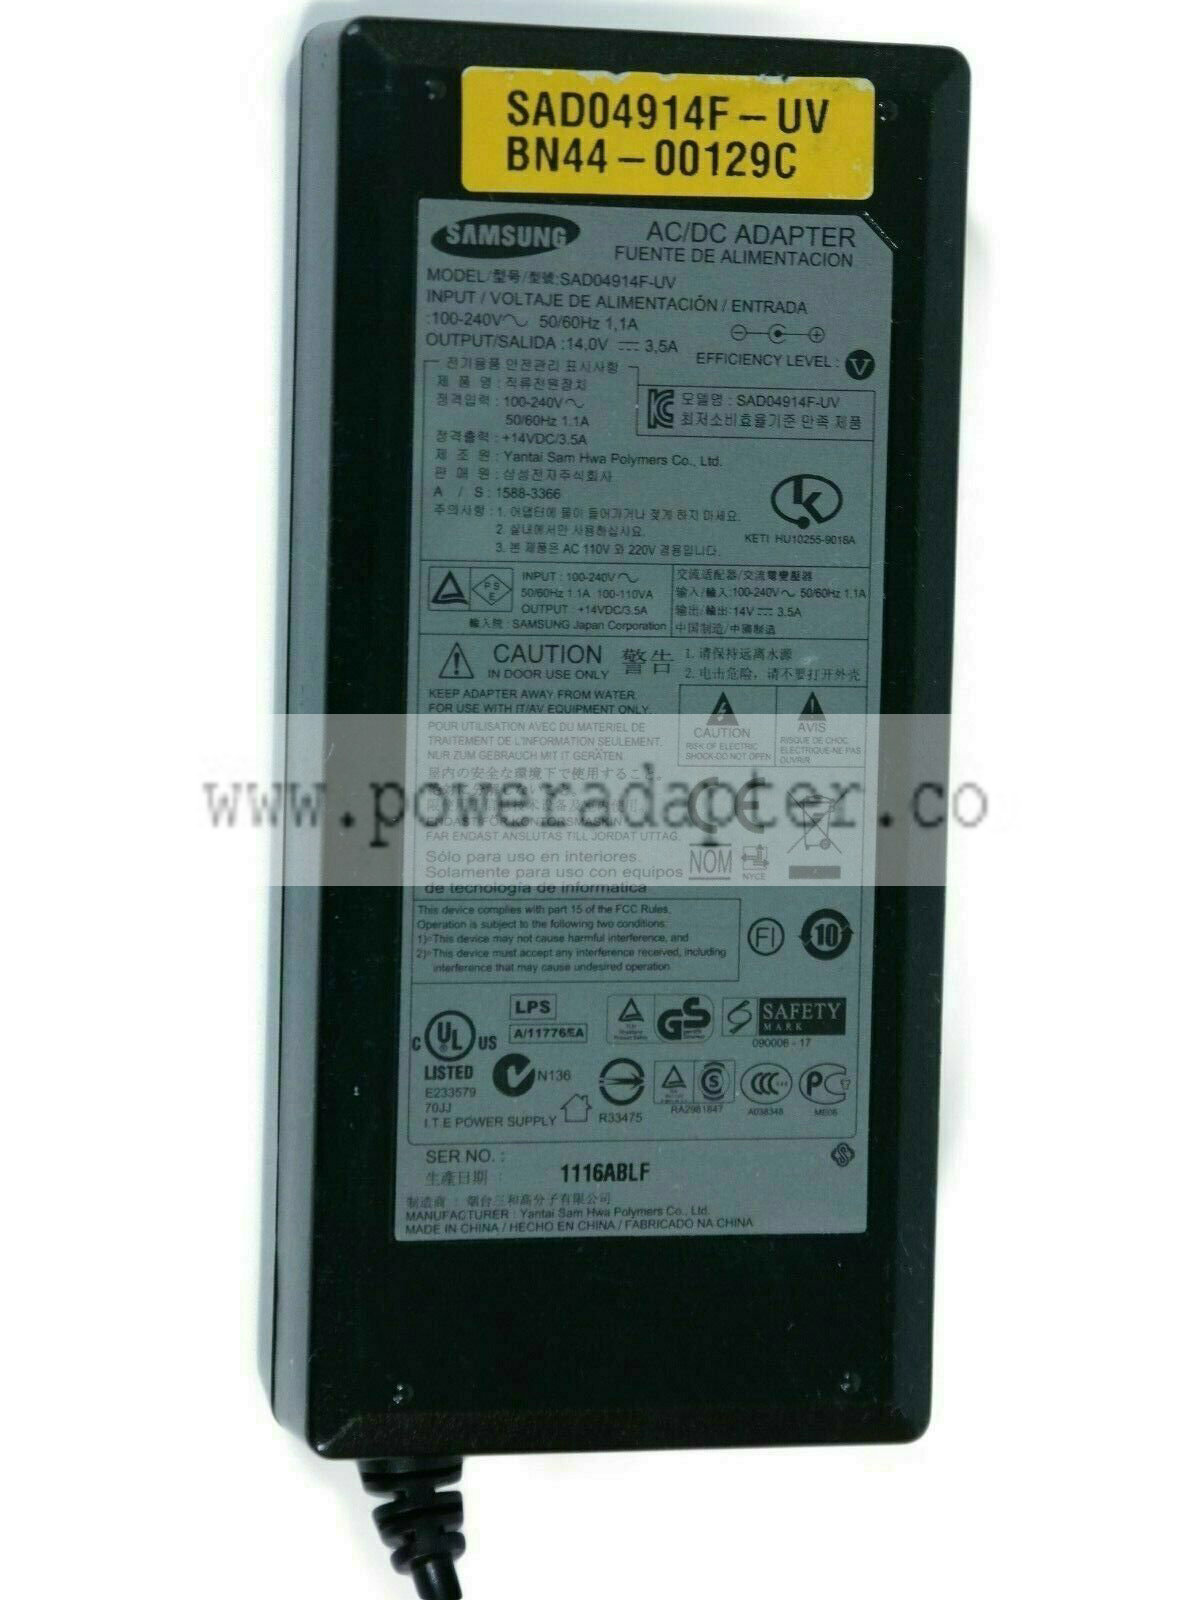 OEM Samsung SAD04914F-UV AC Adapter, 14.0V 3.5A Power Supply LCD monitor Output Voltage(s): 14.0 V, 14 V Brand: Sams